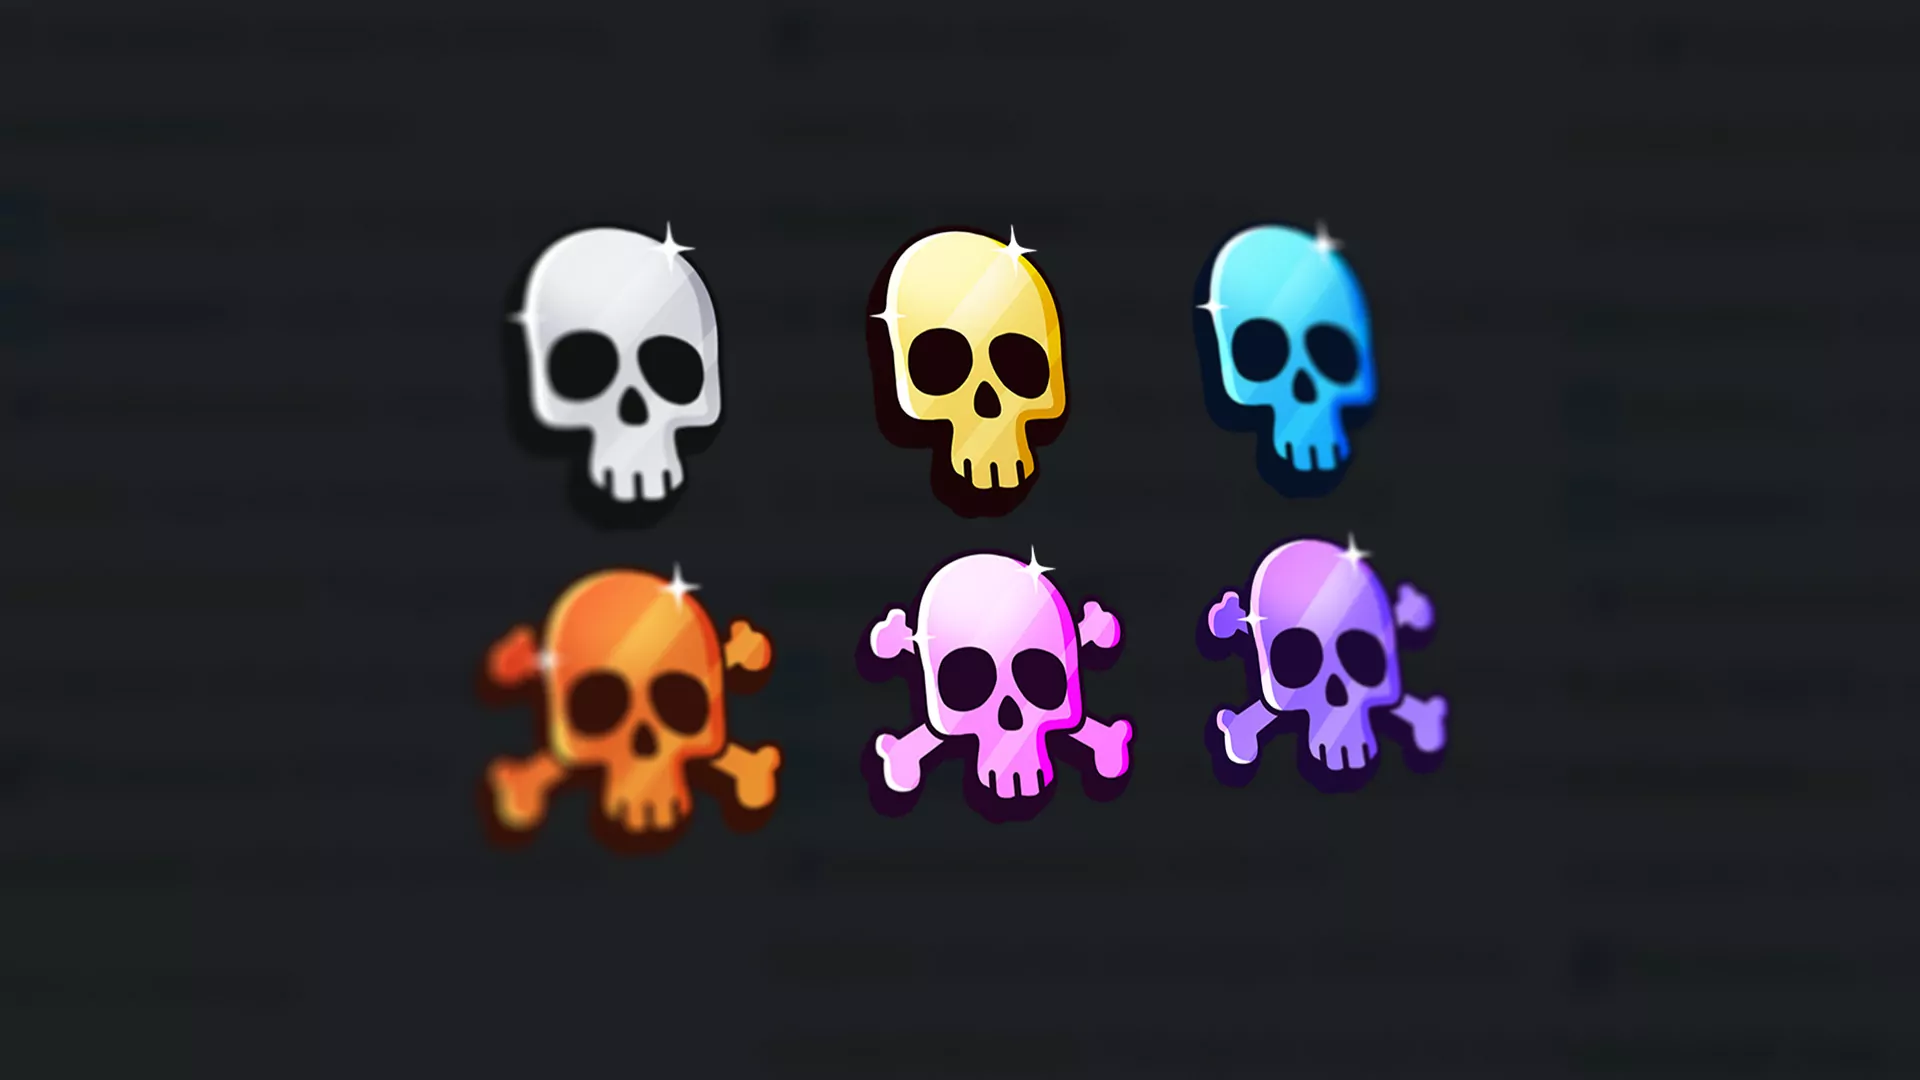 Skull Twitch Sub Badge